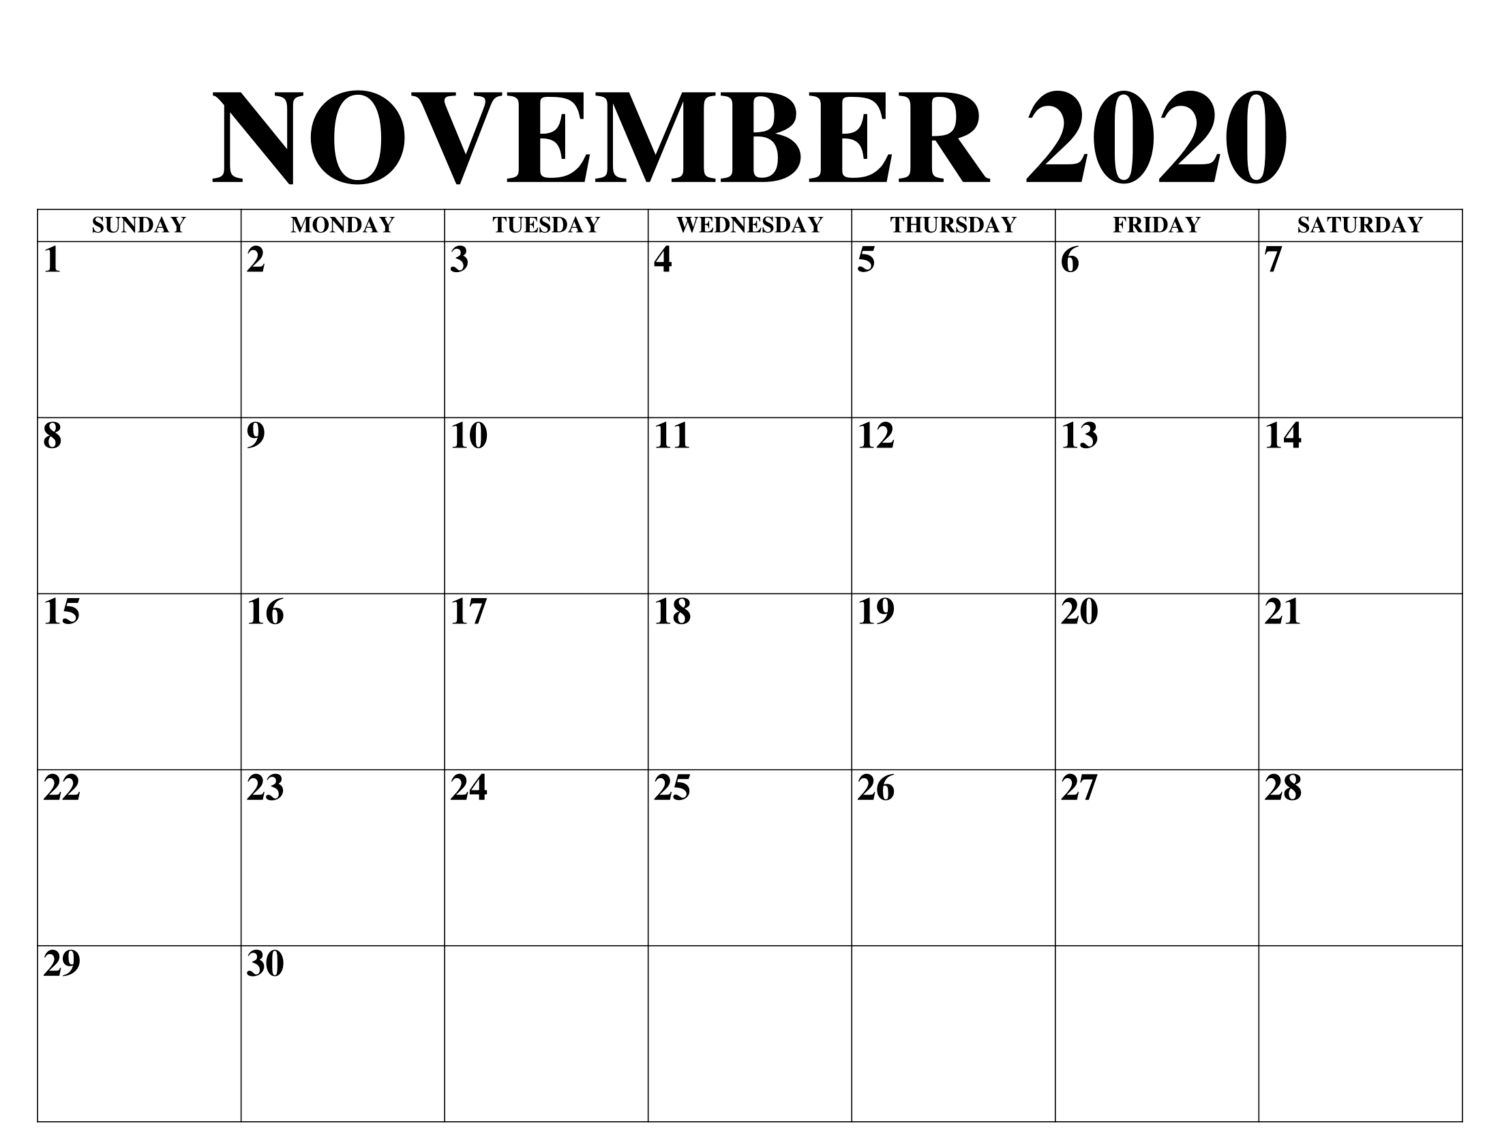 November 2020 Kalender Vorlage Calendar Word Monthly Calendar Template Word Template